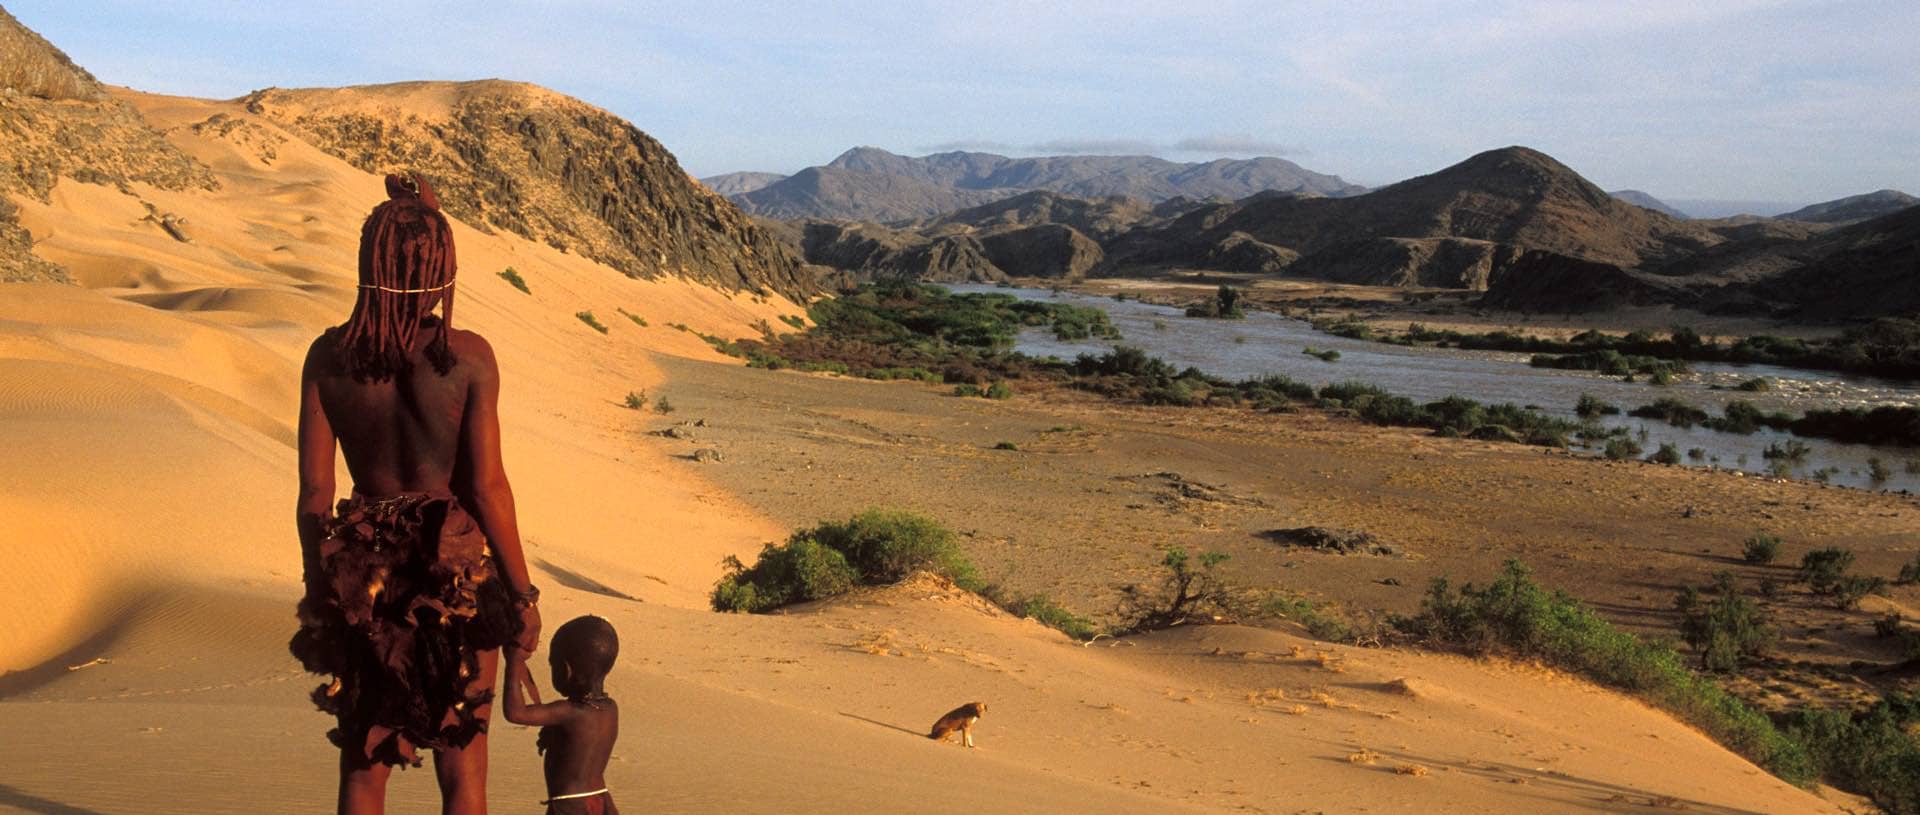 A Himba woman and child gaze out across a mountainous desert.